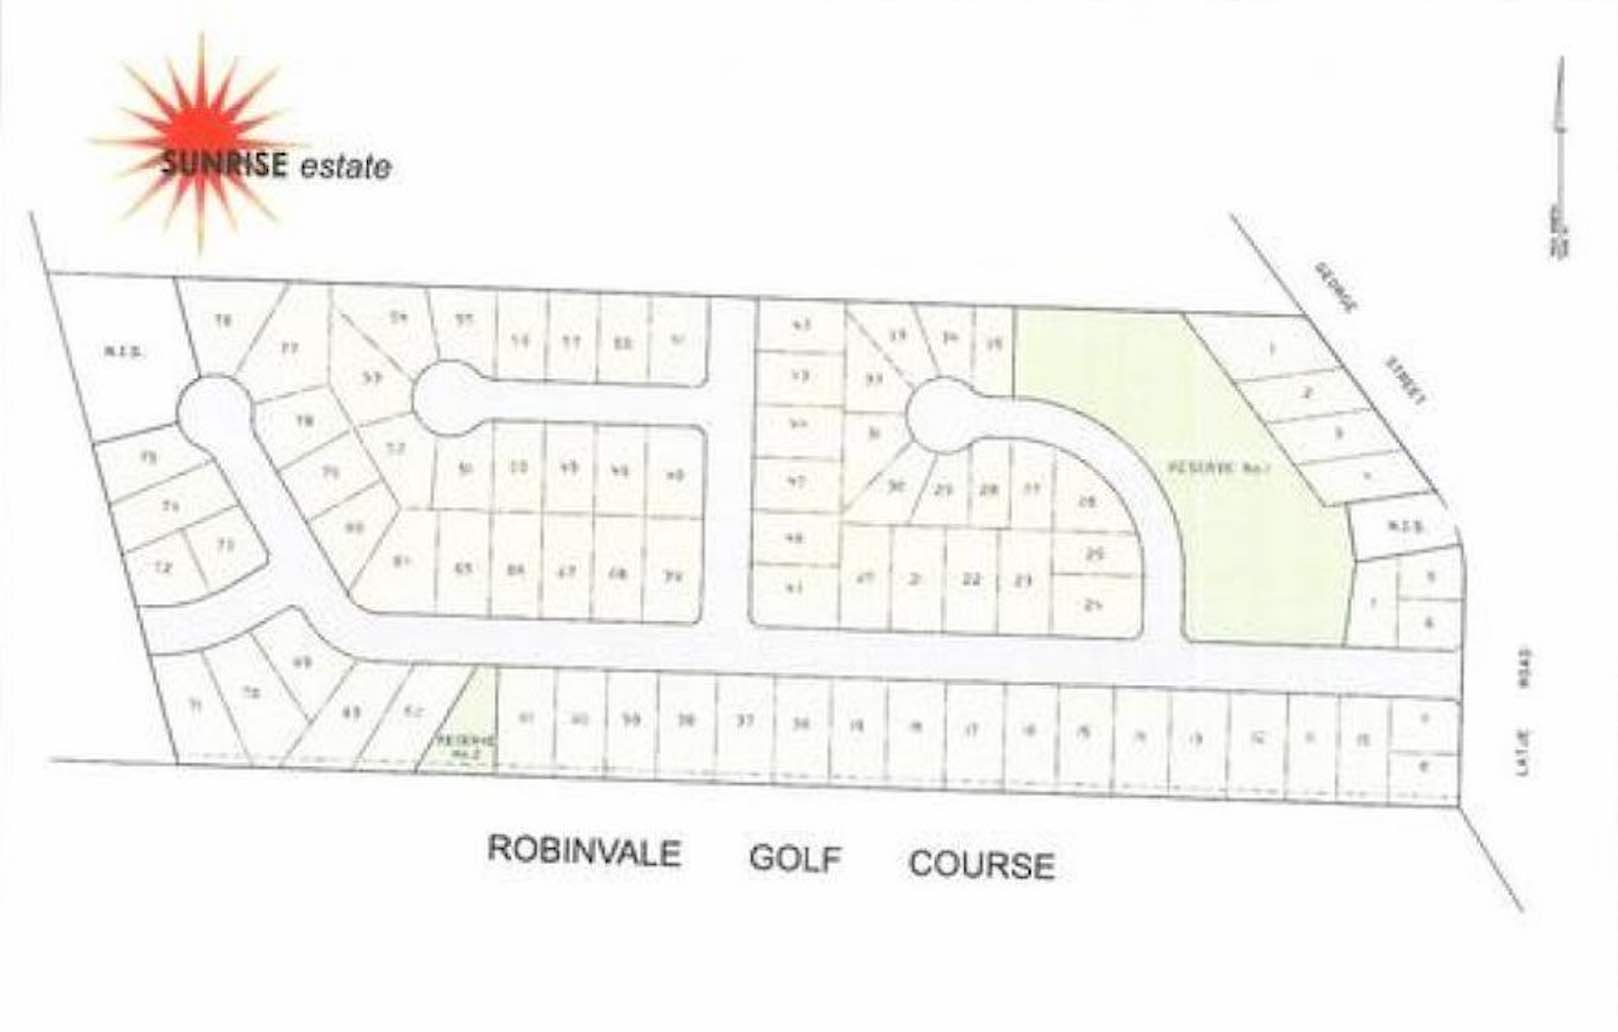 Sunrise Estate - Robinvale Masterplan